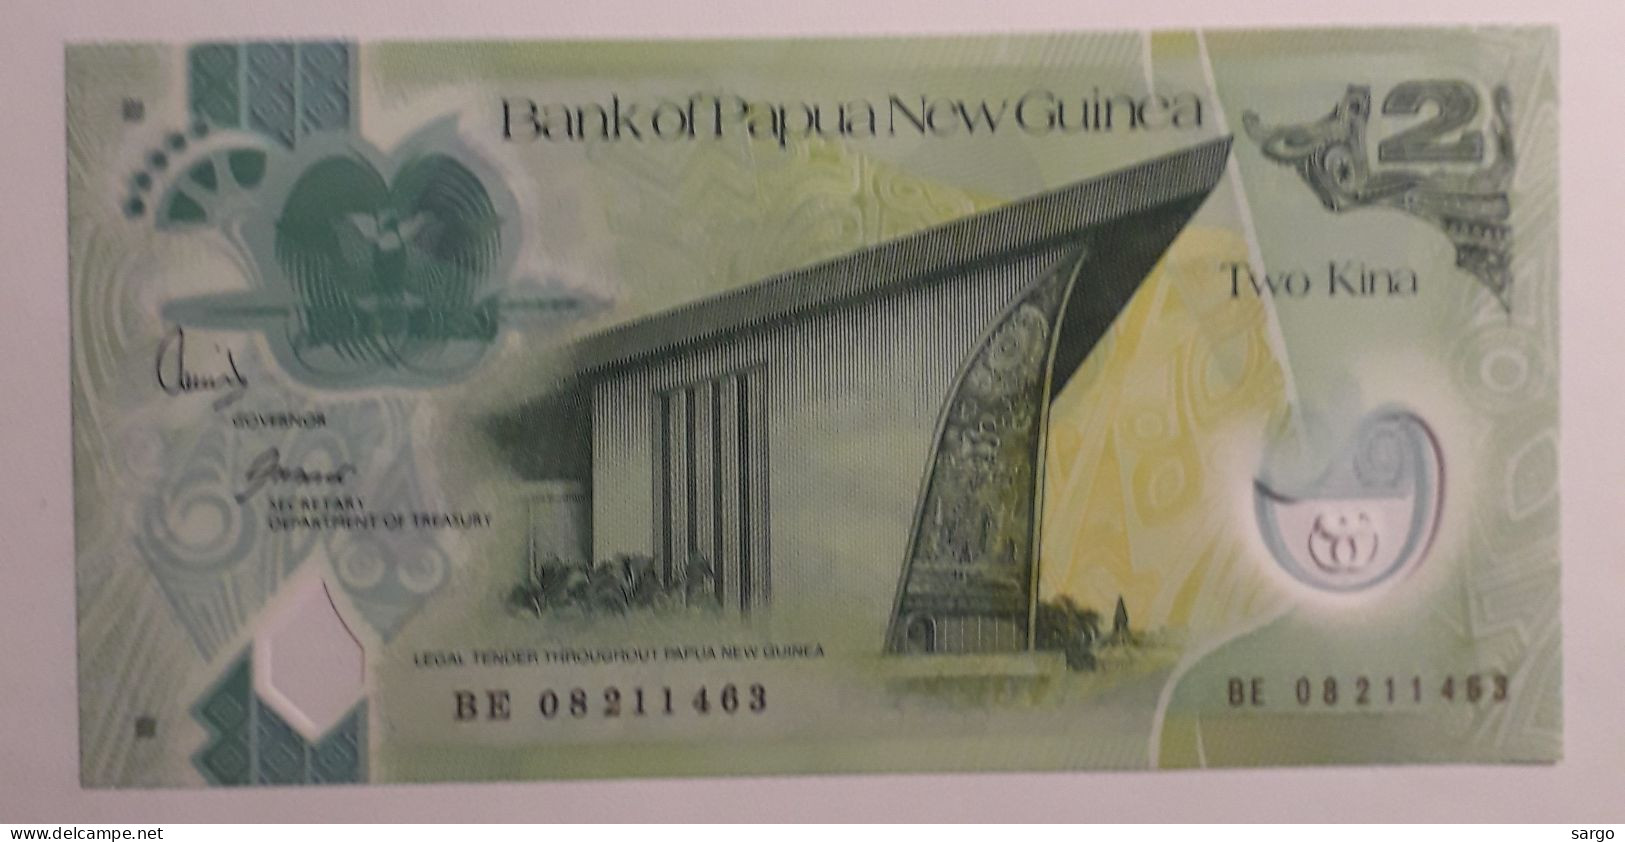 PAPUA NEW GUINEA - 2 KINA - 2007-2014 - UNCIRC P 38 - POLYMER - BANKNOTES - PAPER MONEY - CARTAMONETA - - Papouasie-Nouvelle-Guinée